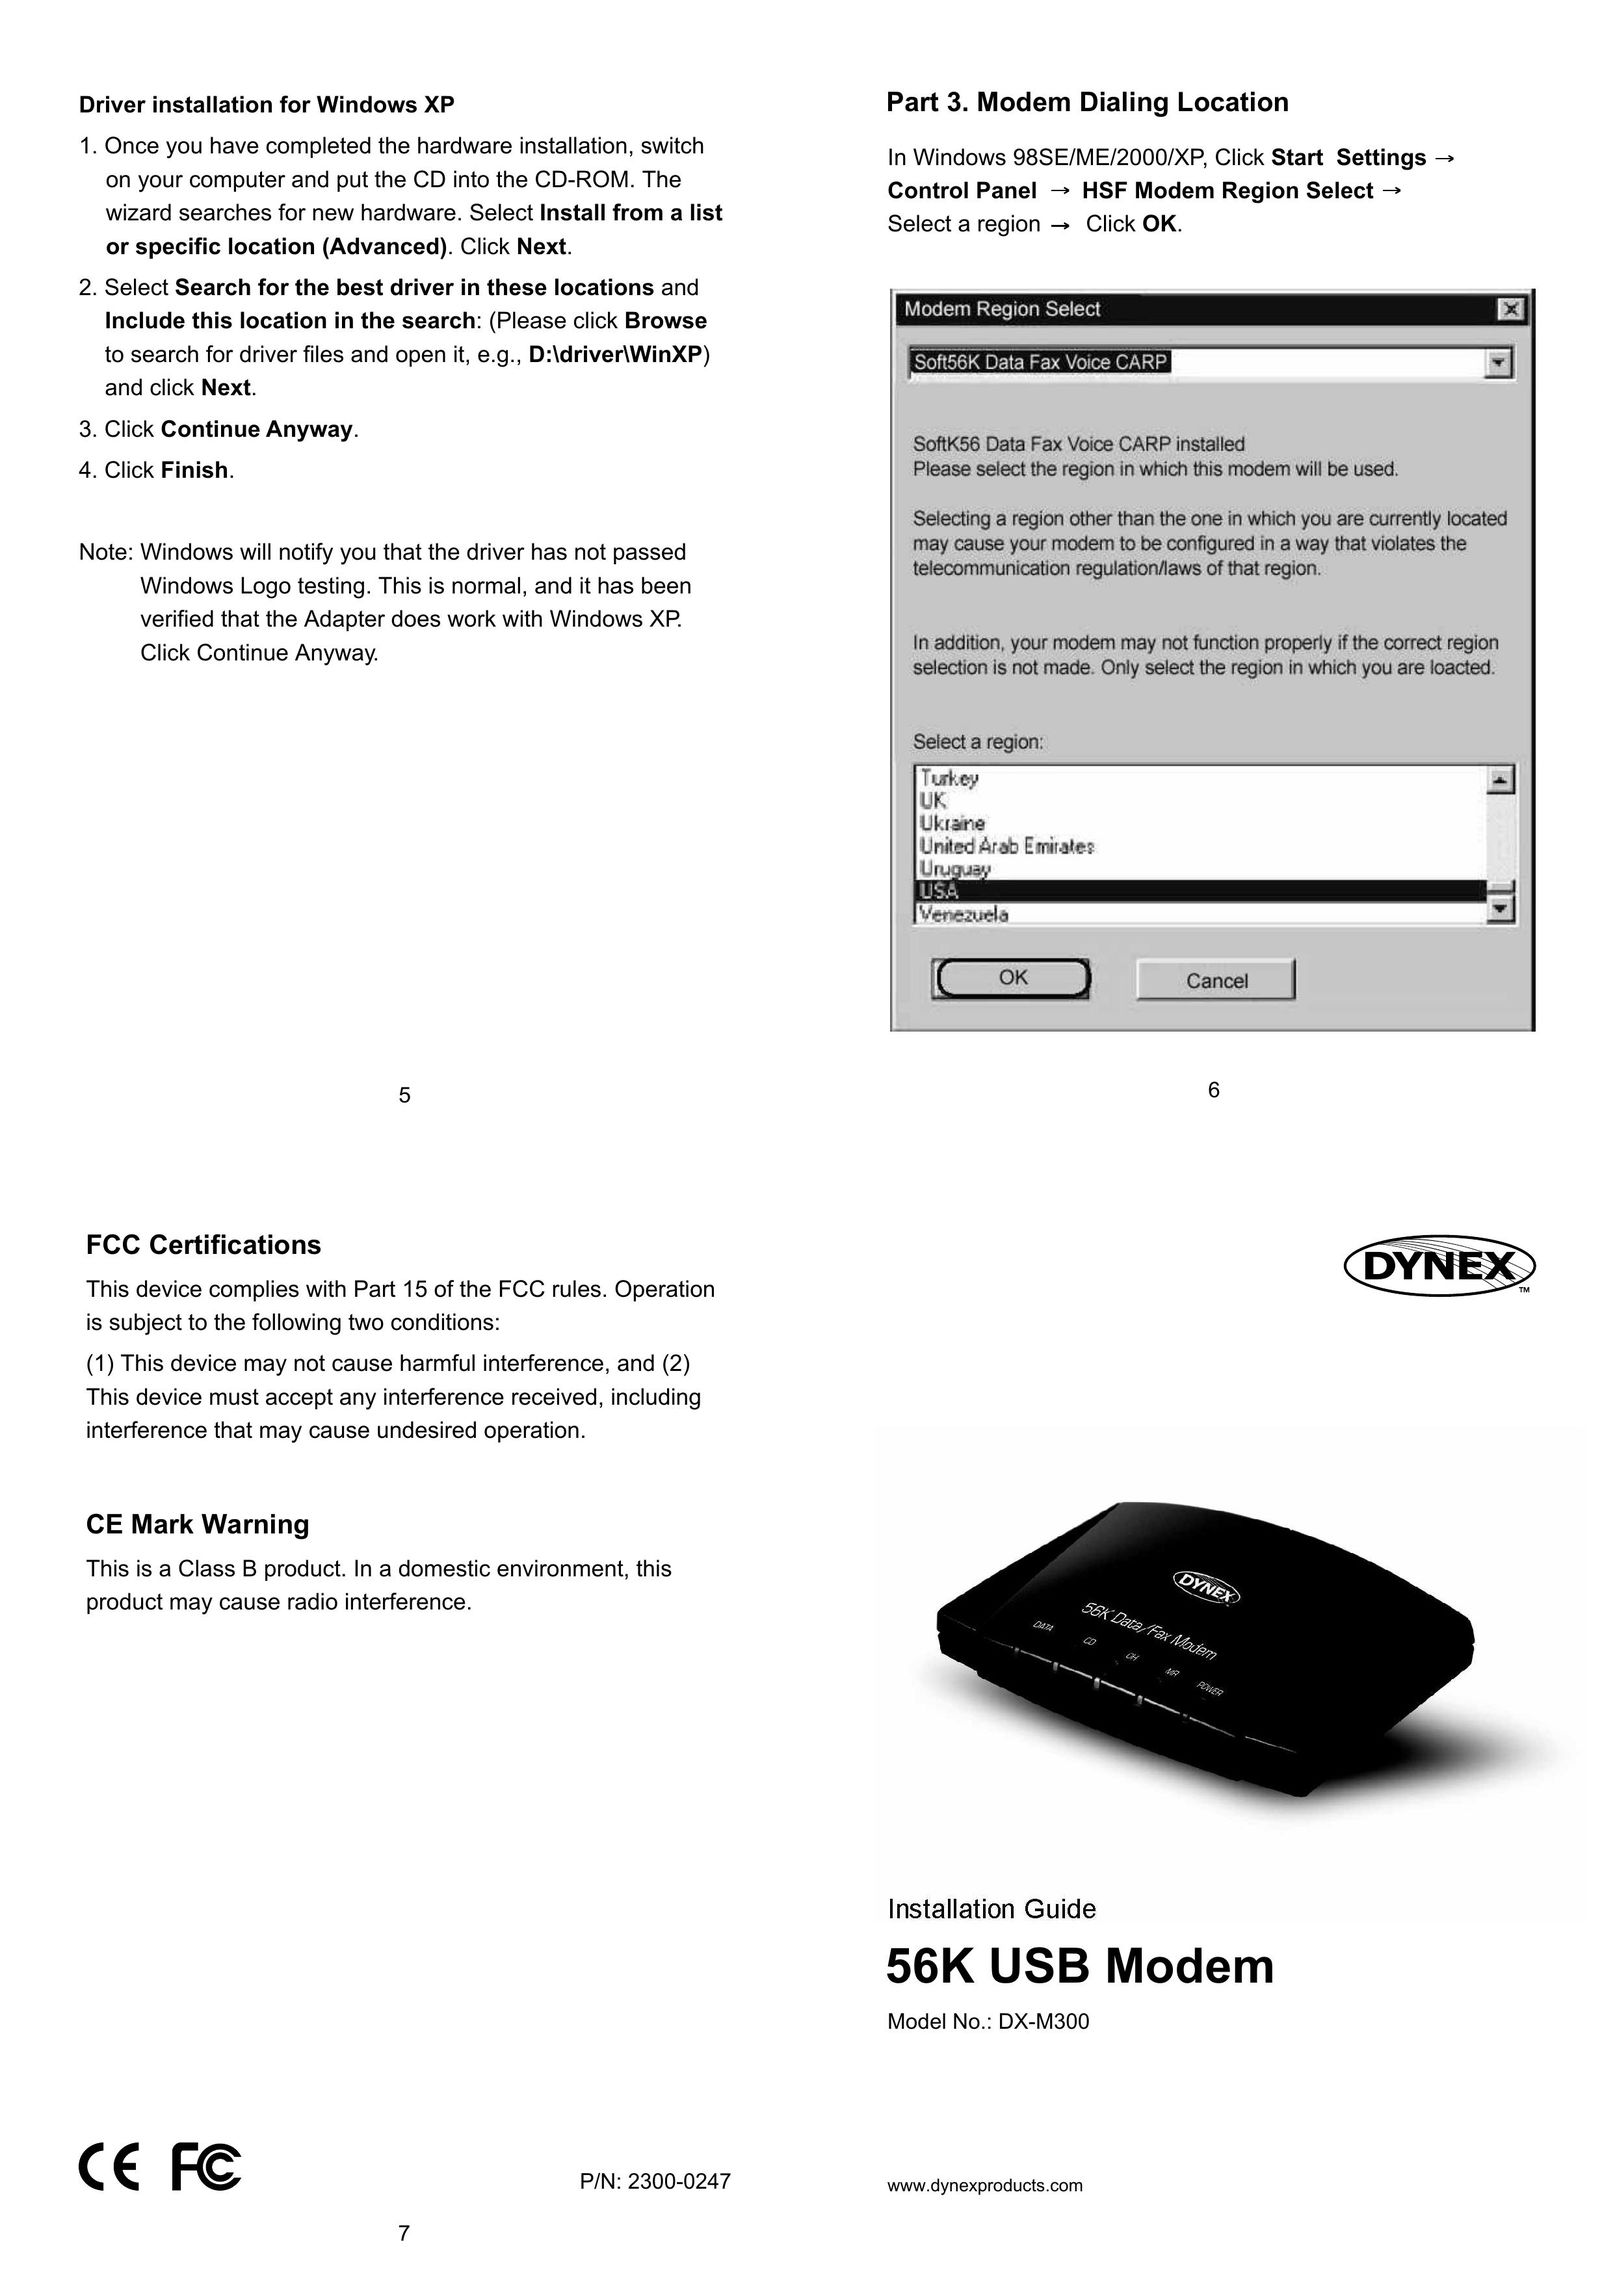 Dynex DX-M300 Modem User Manual (Page 1)